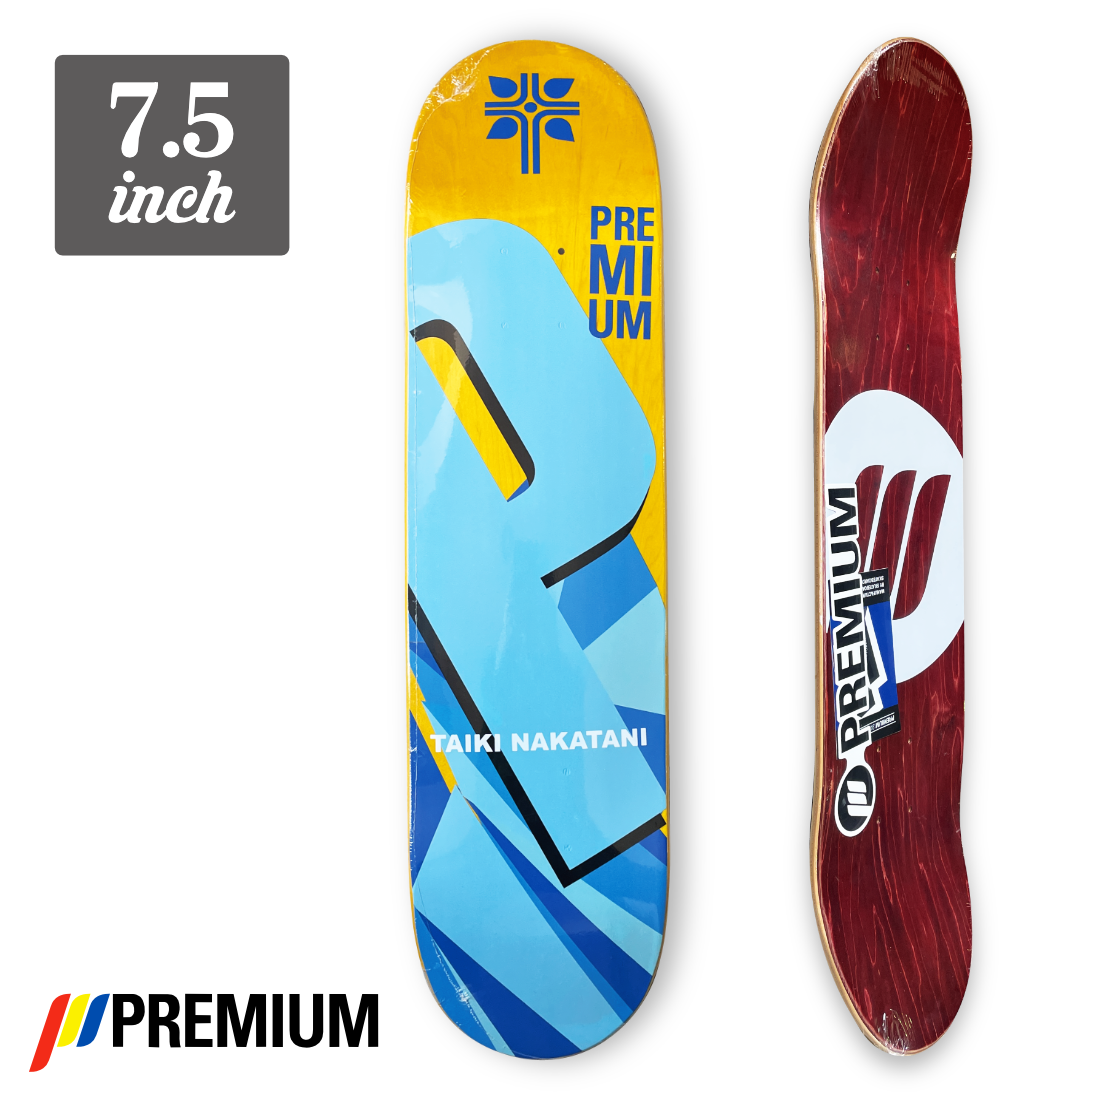 (子供用)【7.5】Premium Skateboards - Big P "Taiki Nakatani"